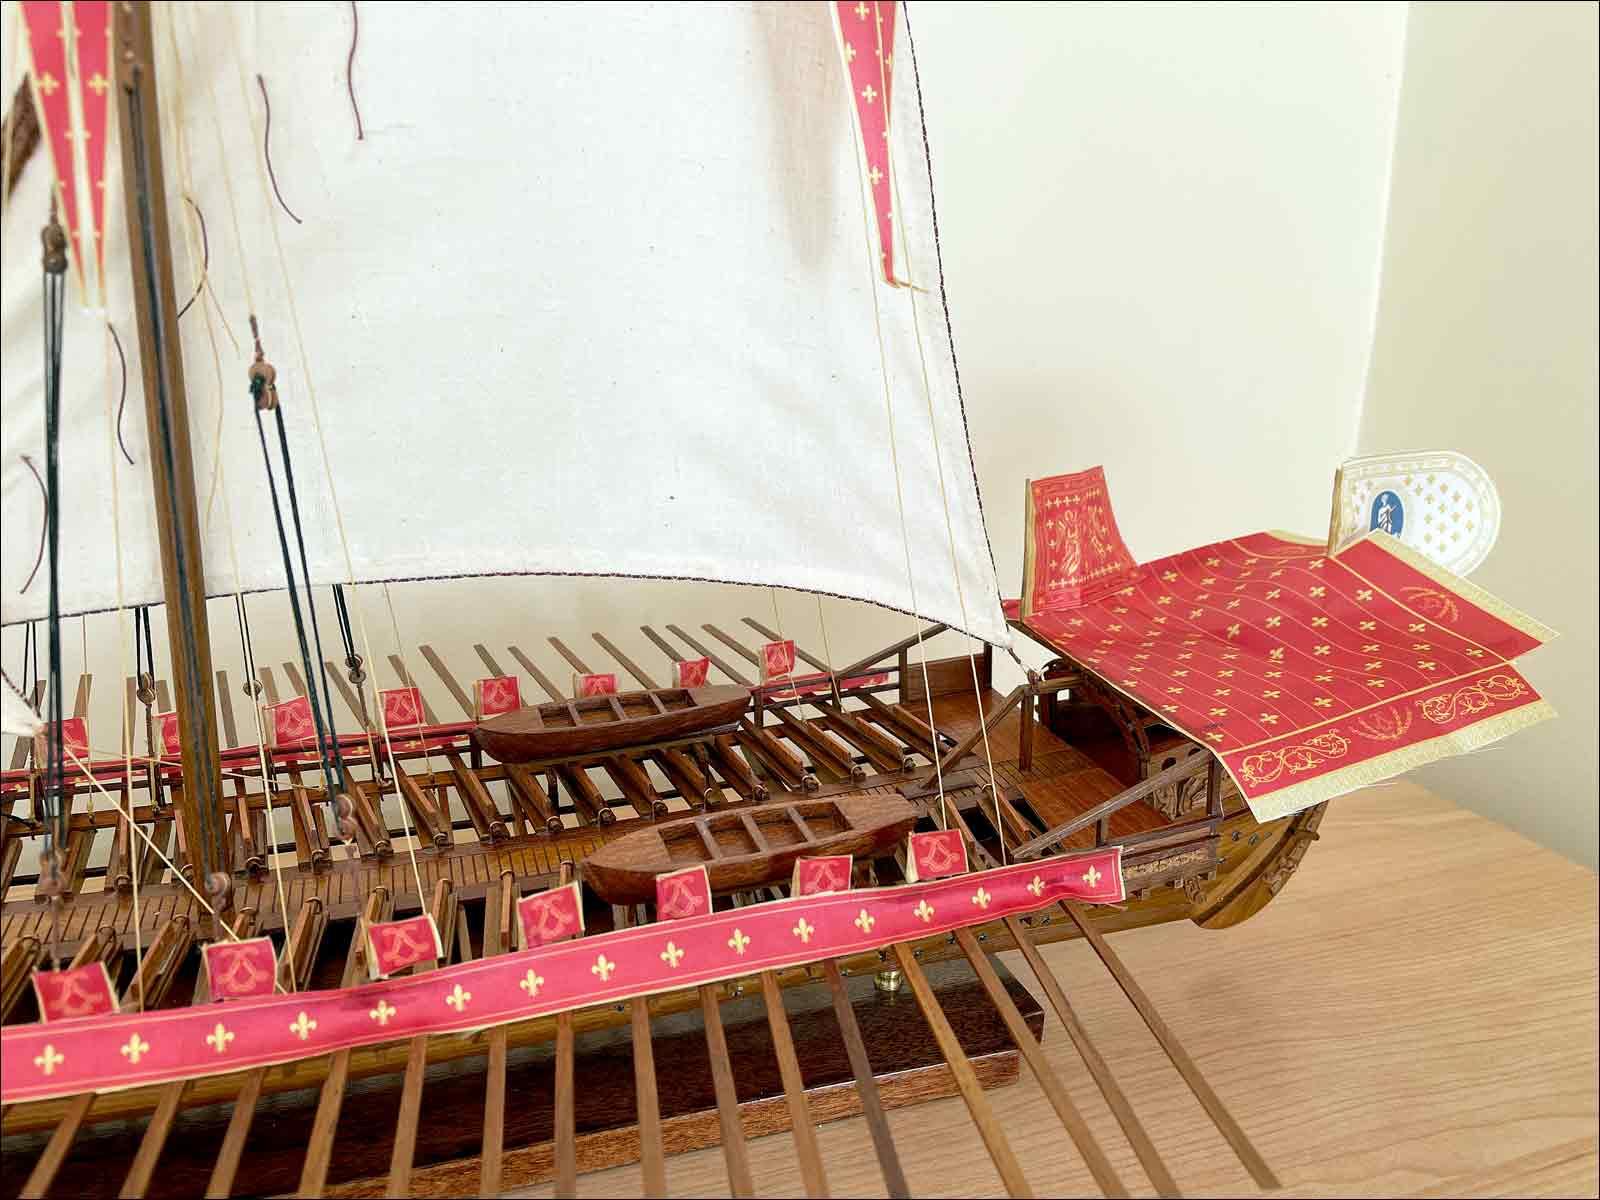 La Reale de France wooden model ship